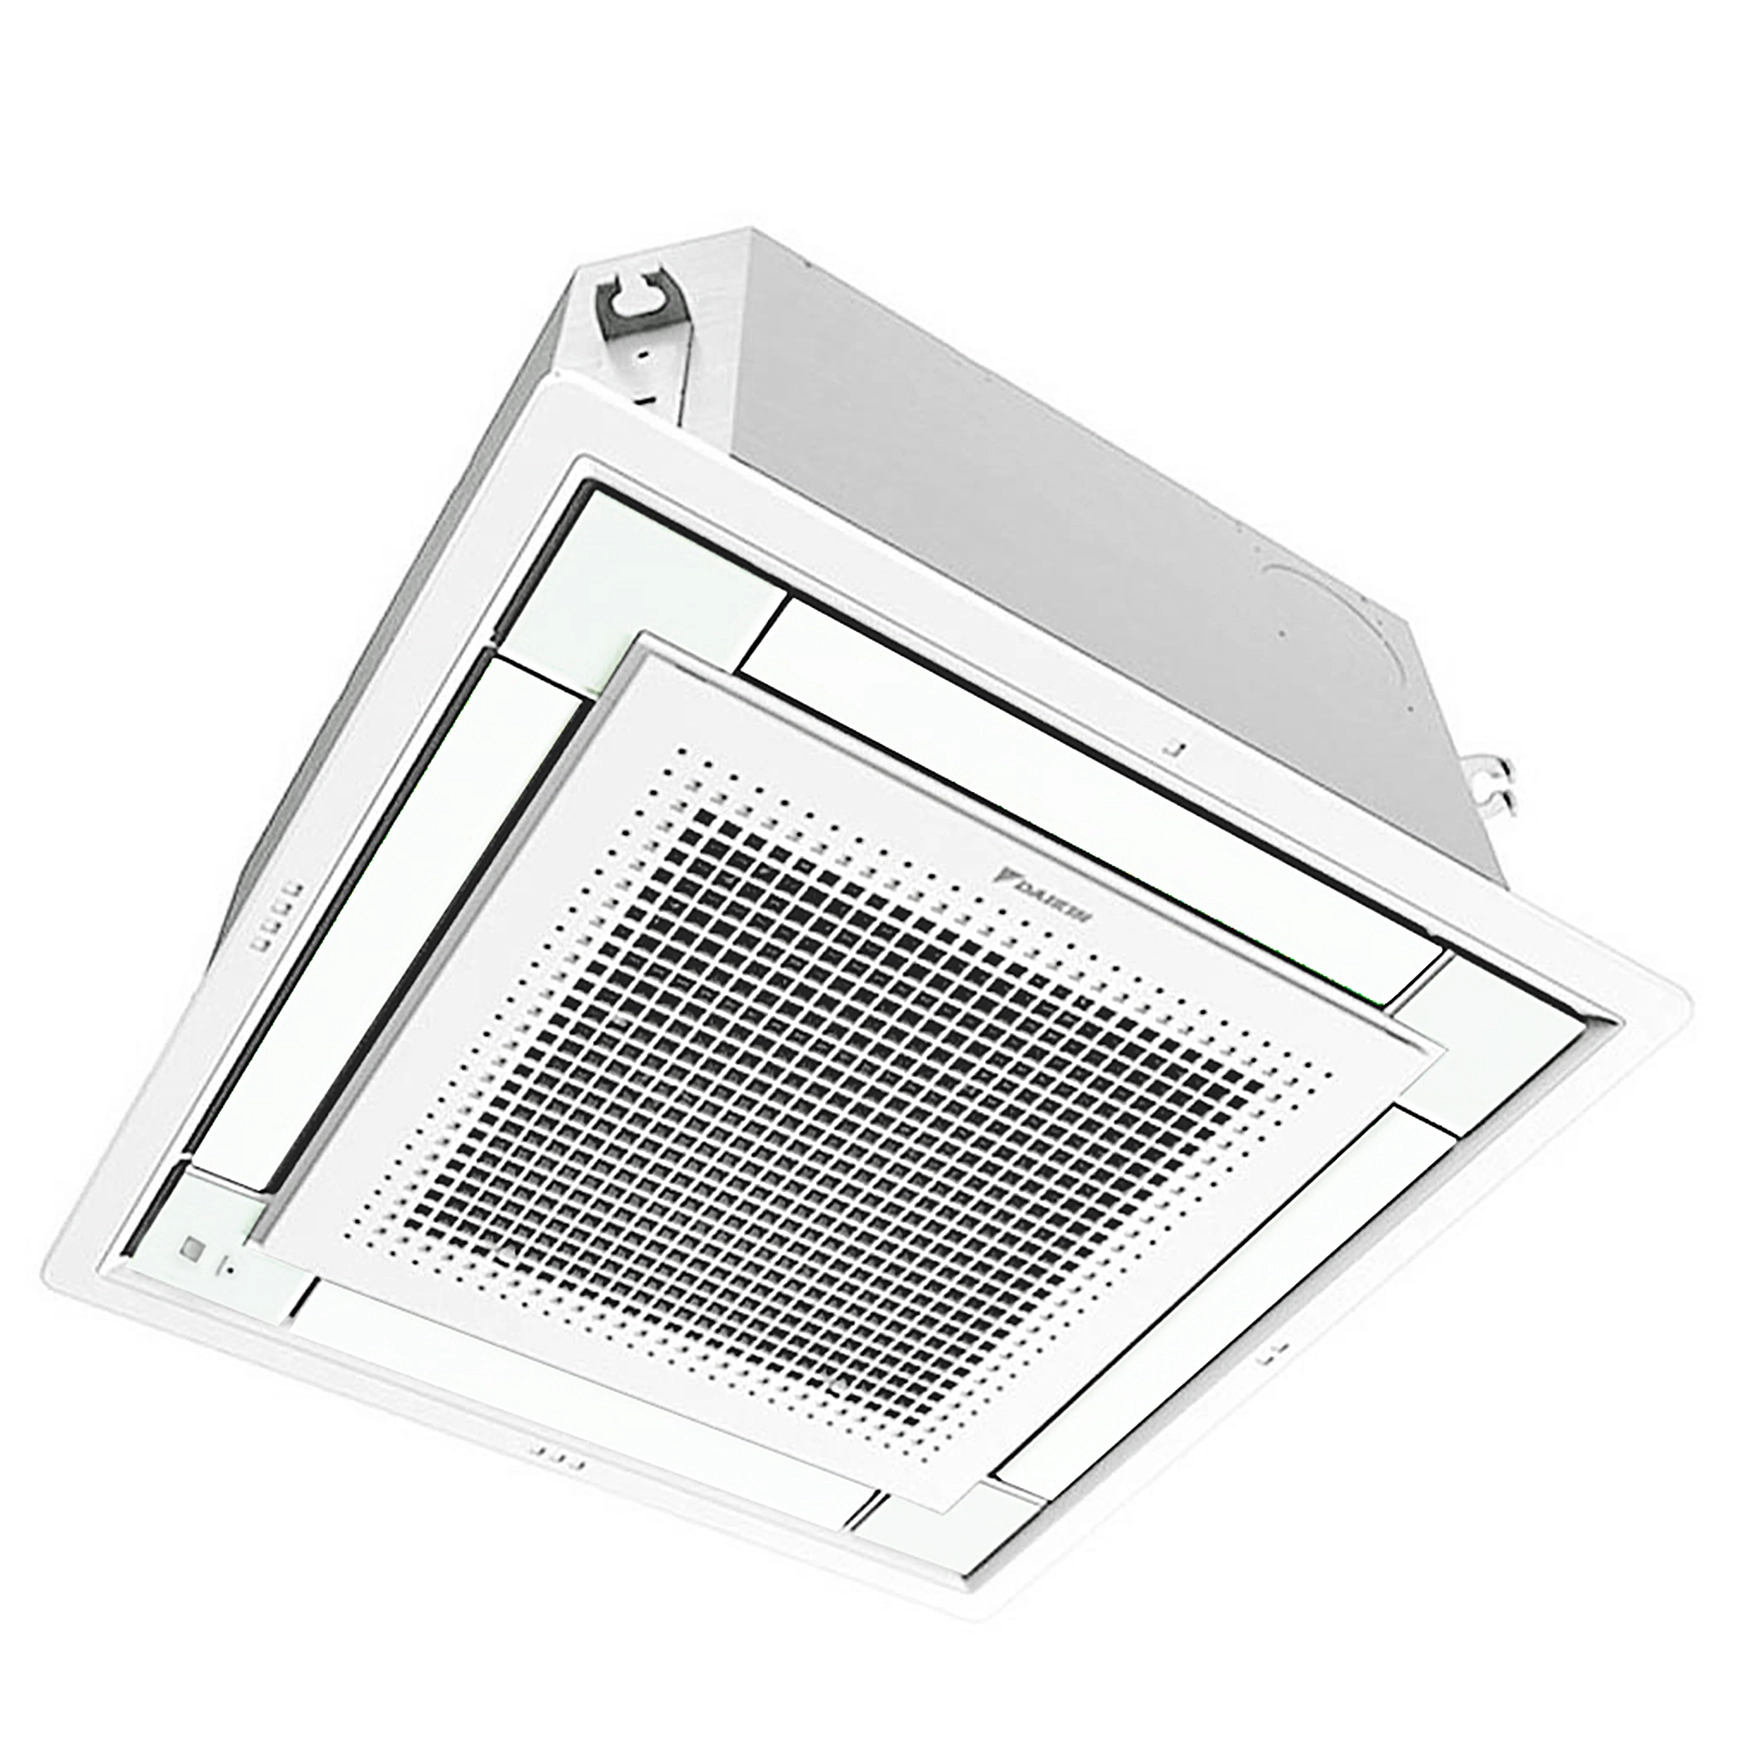 Daikin ceiling mounted air conditioning FFFC60AVM inverter (2.5Hp)